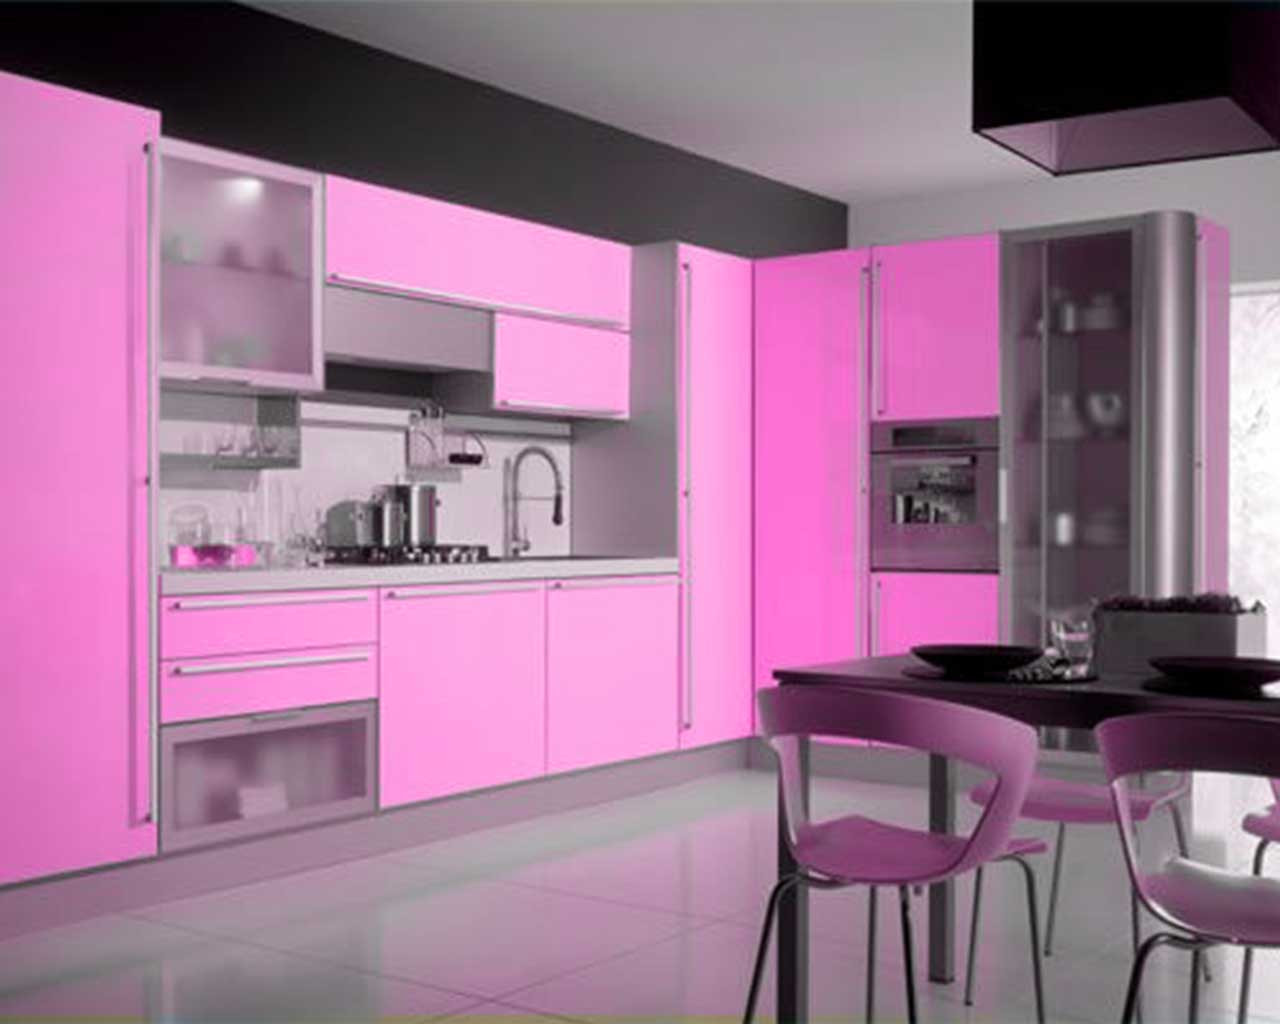 Best ideas about Pink Kitchen Decoration
. Save or Pin Pink Kitchen Decorating Ideas in Elegant Style Now.